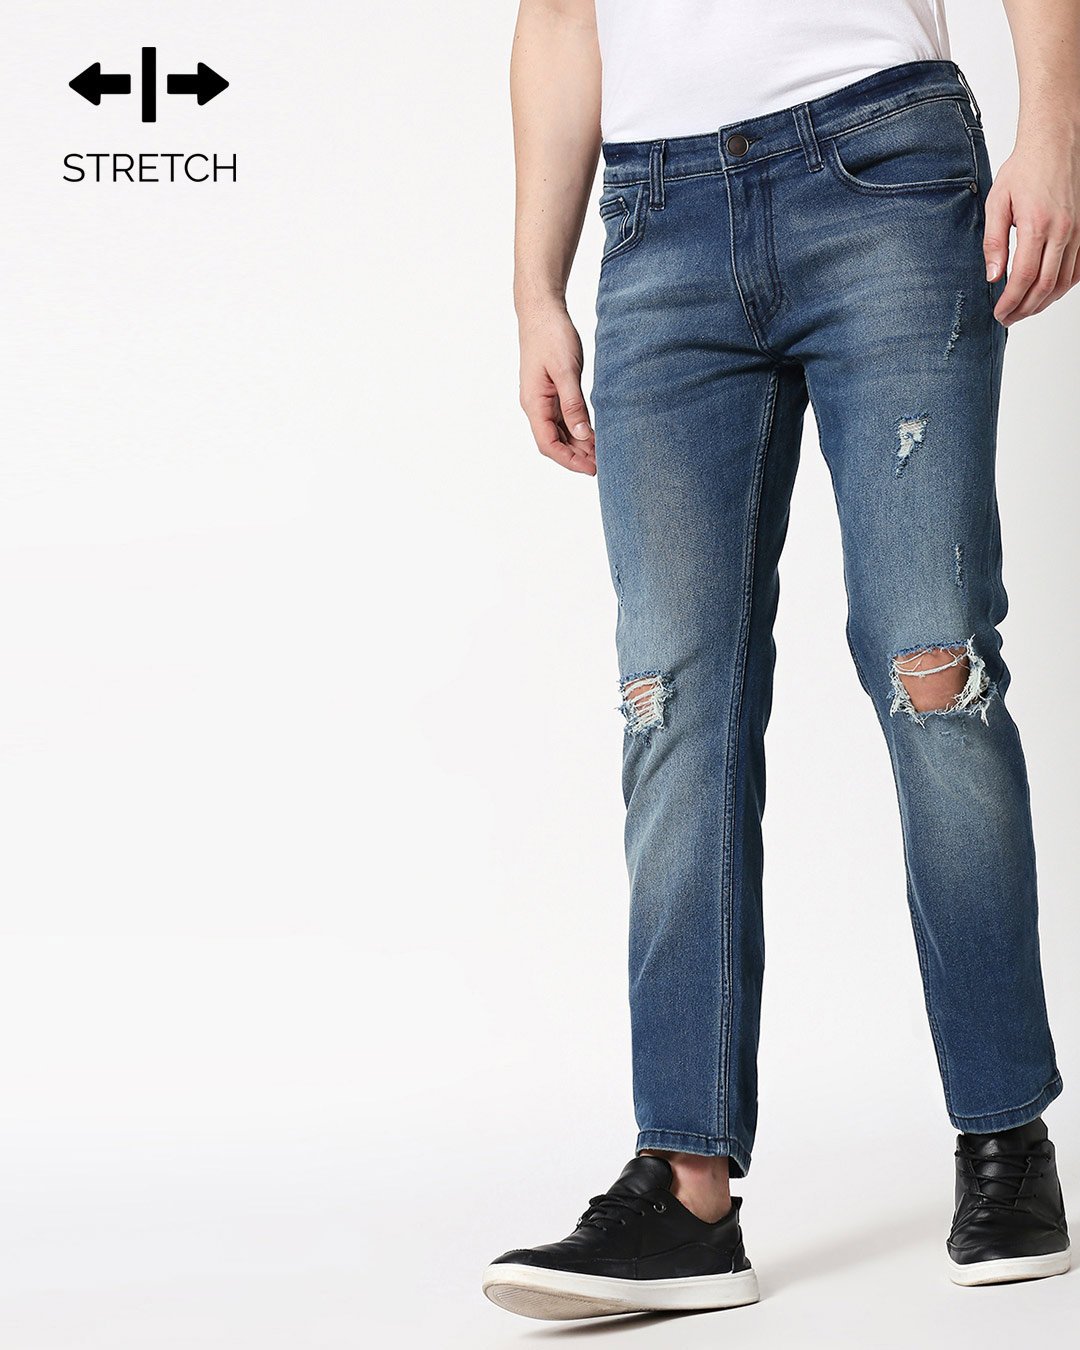 Best Denim Jeans Trends For Men in 2021